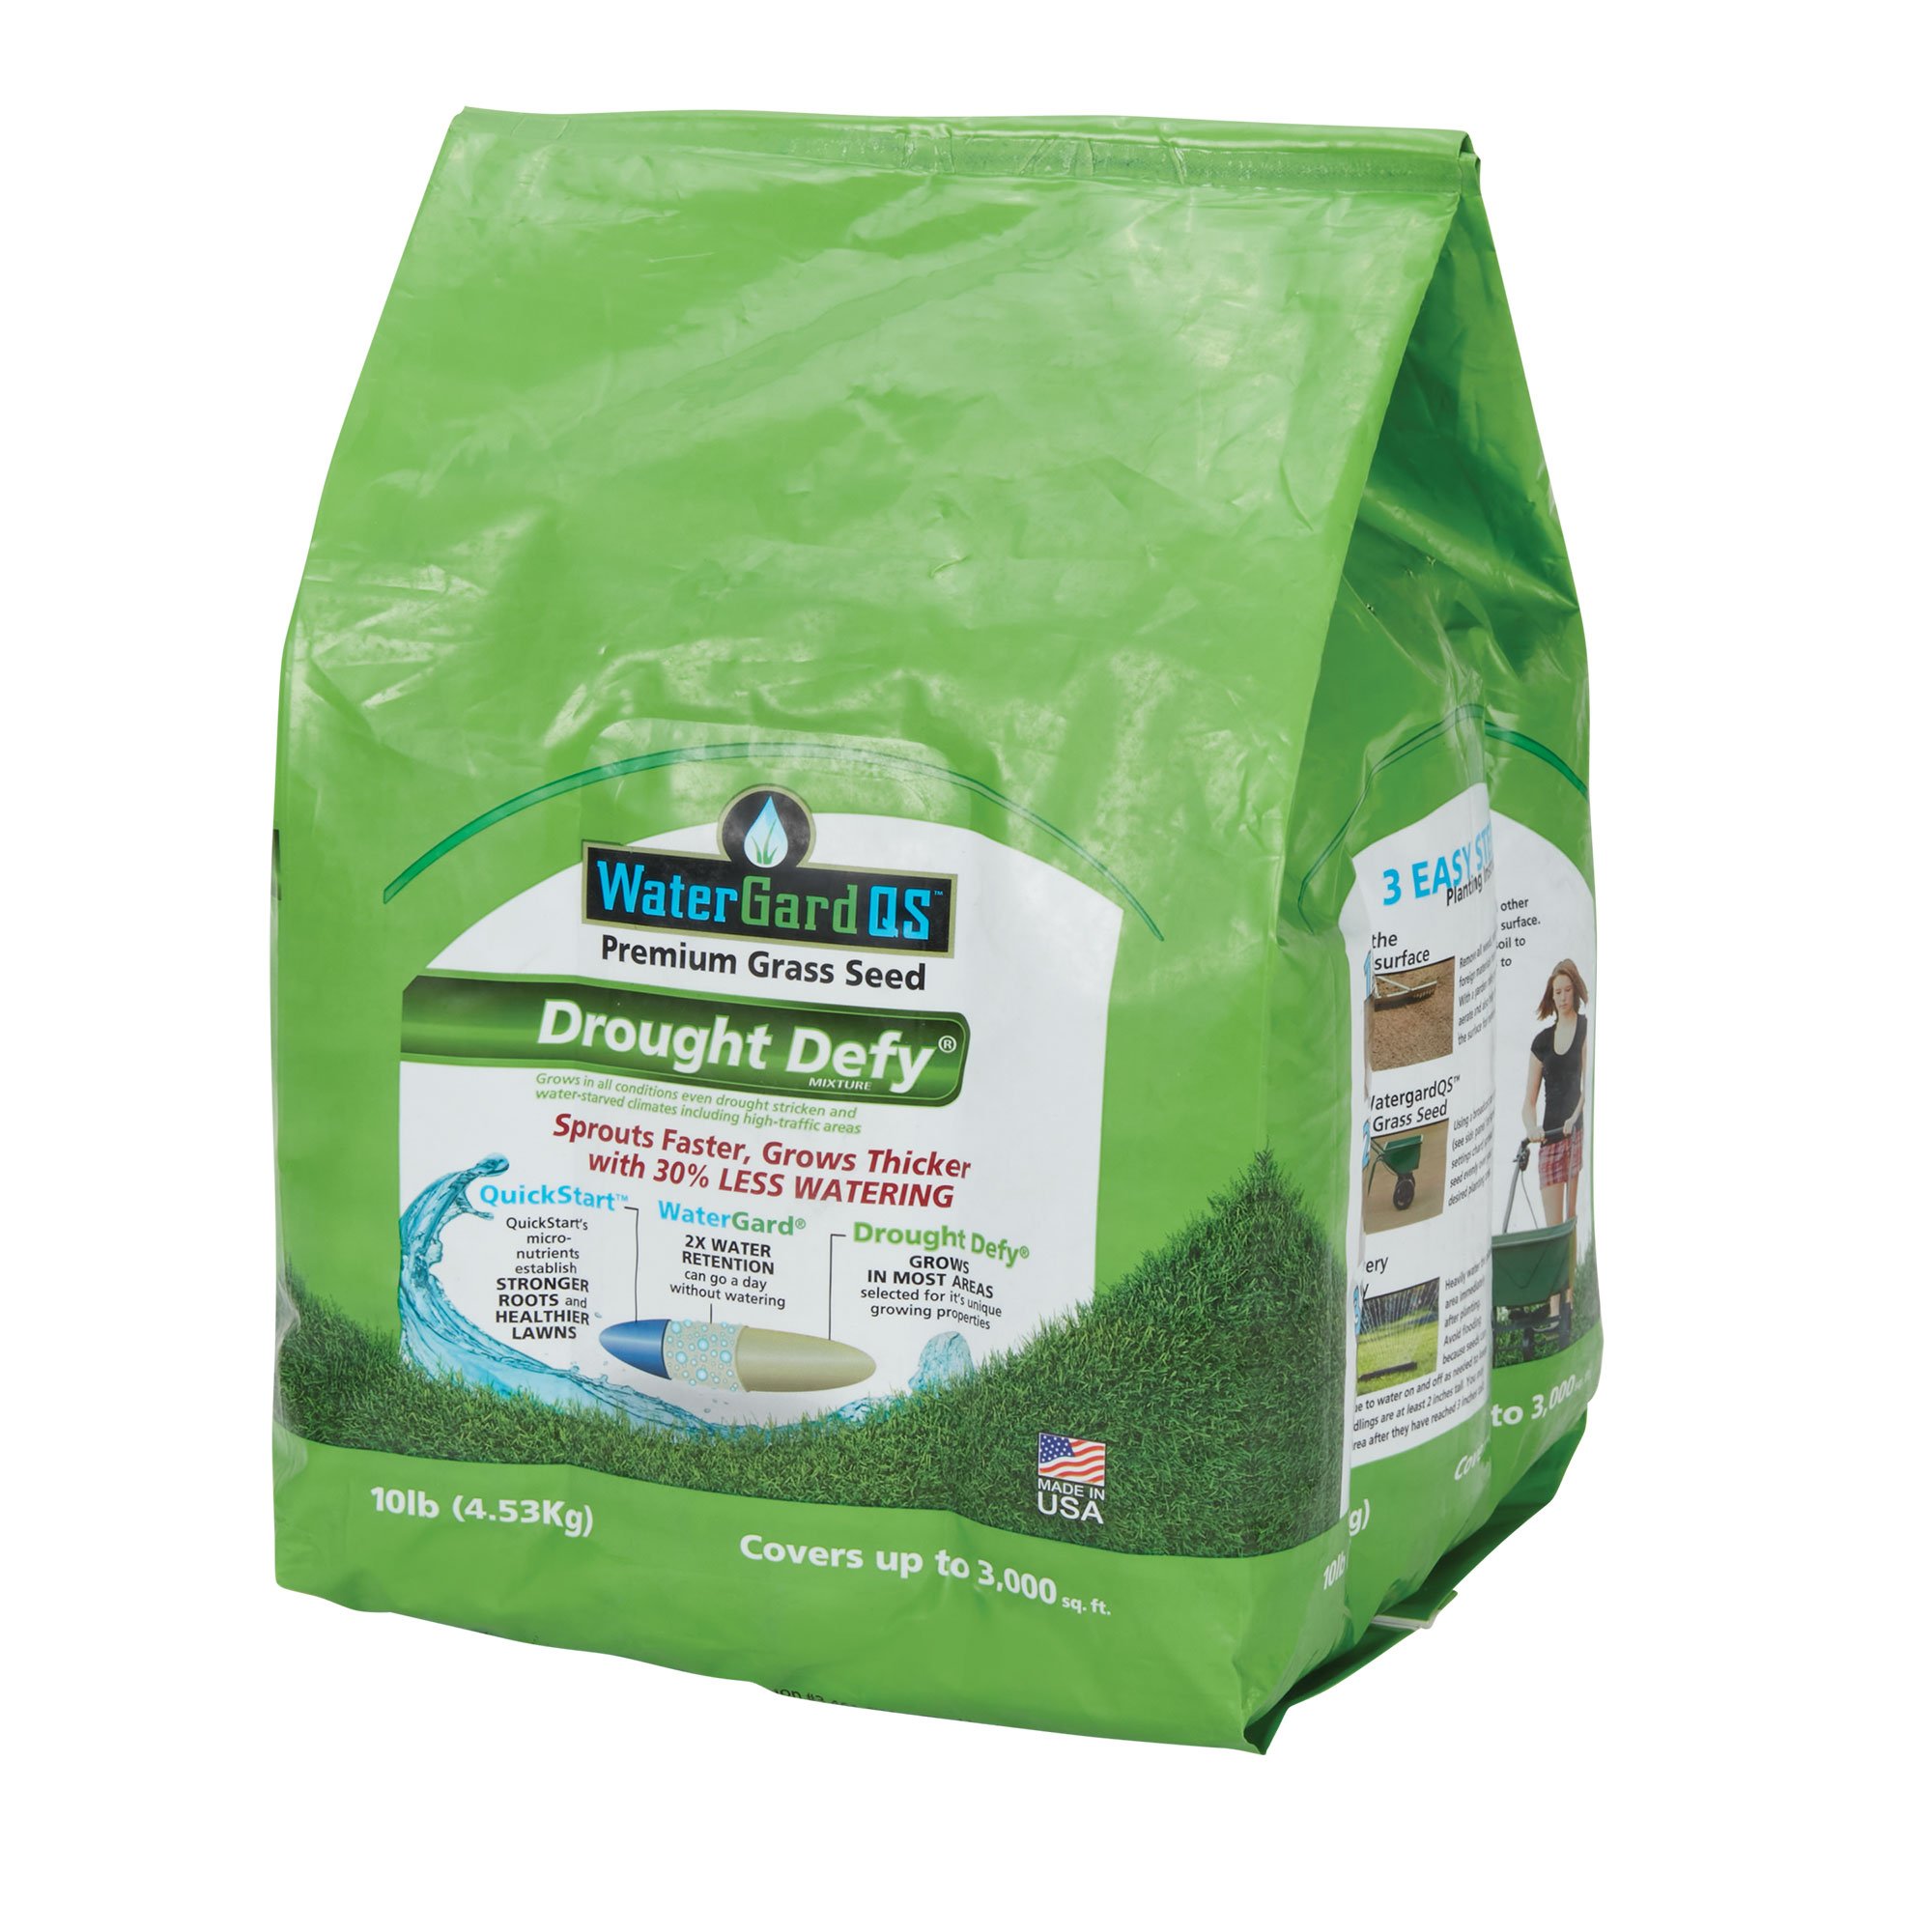 Drought Defy Grass Seed 10-lb. Bag